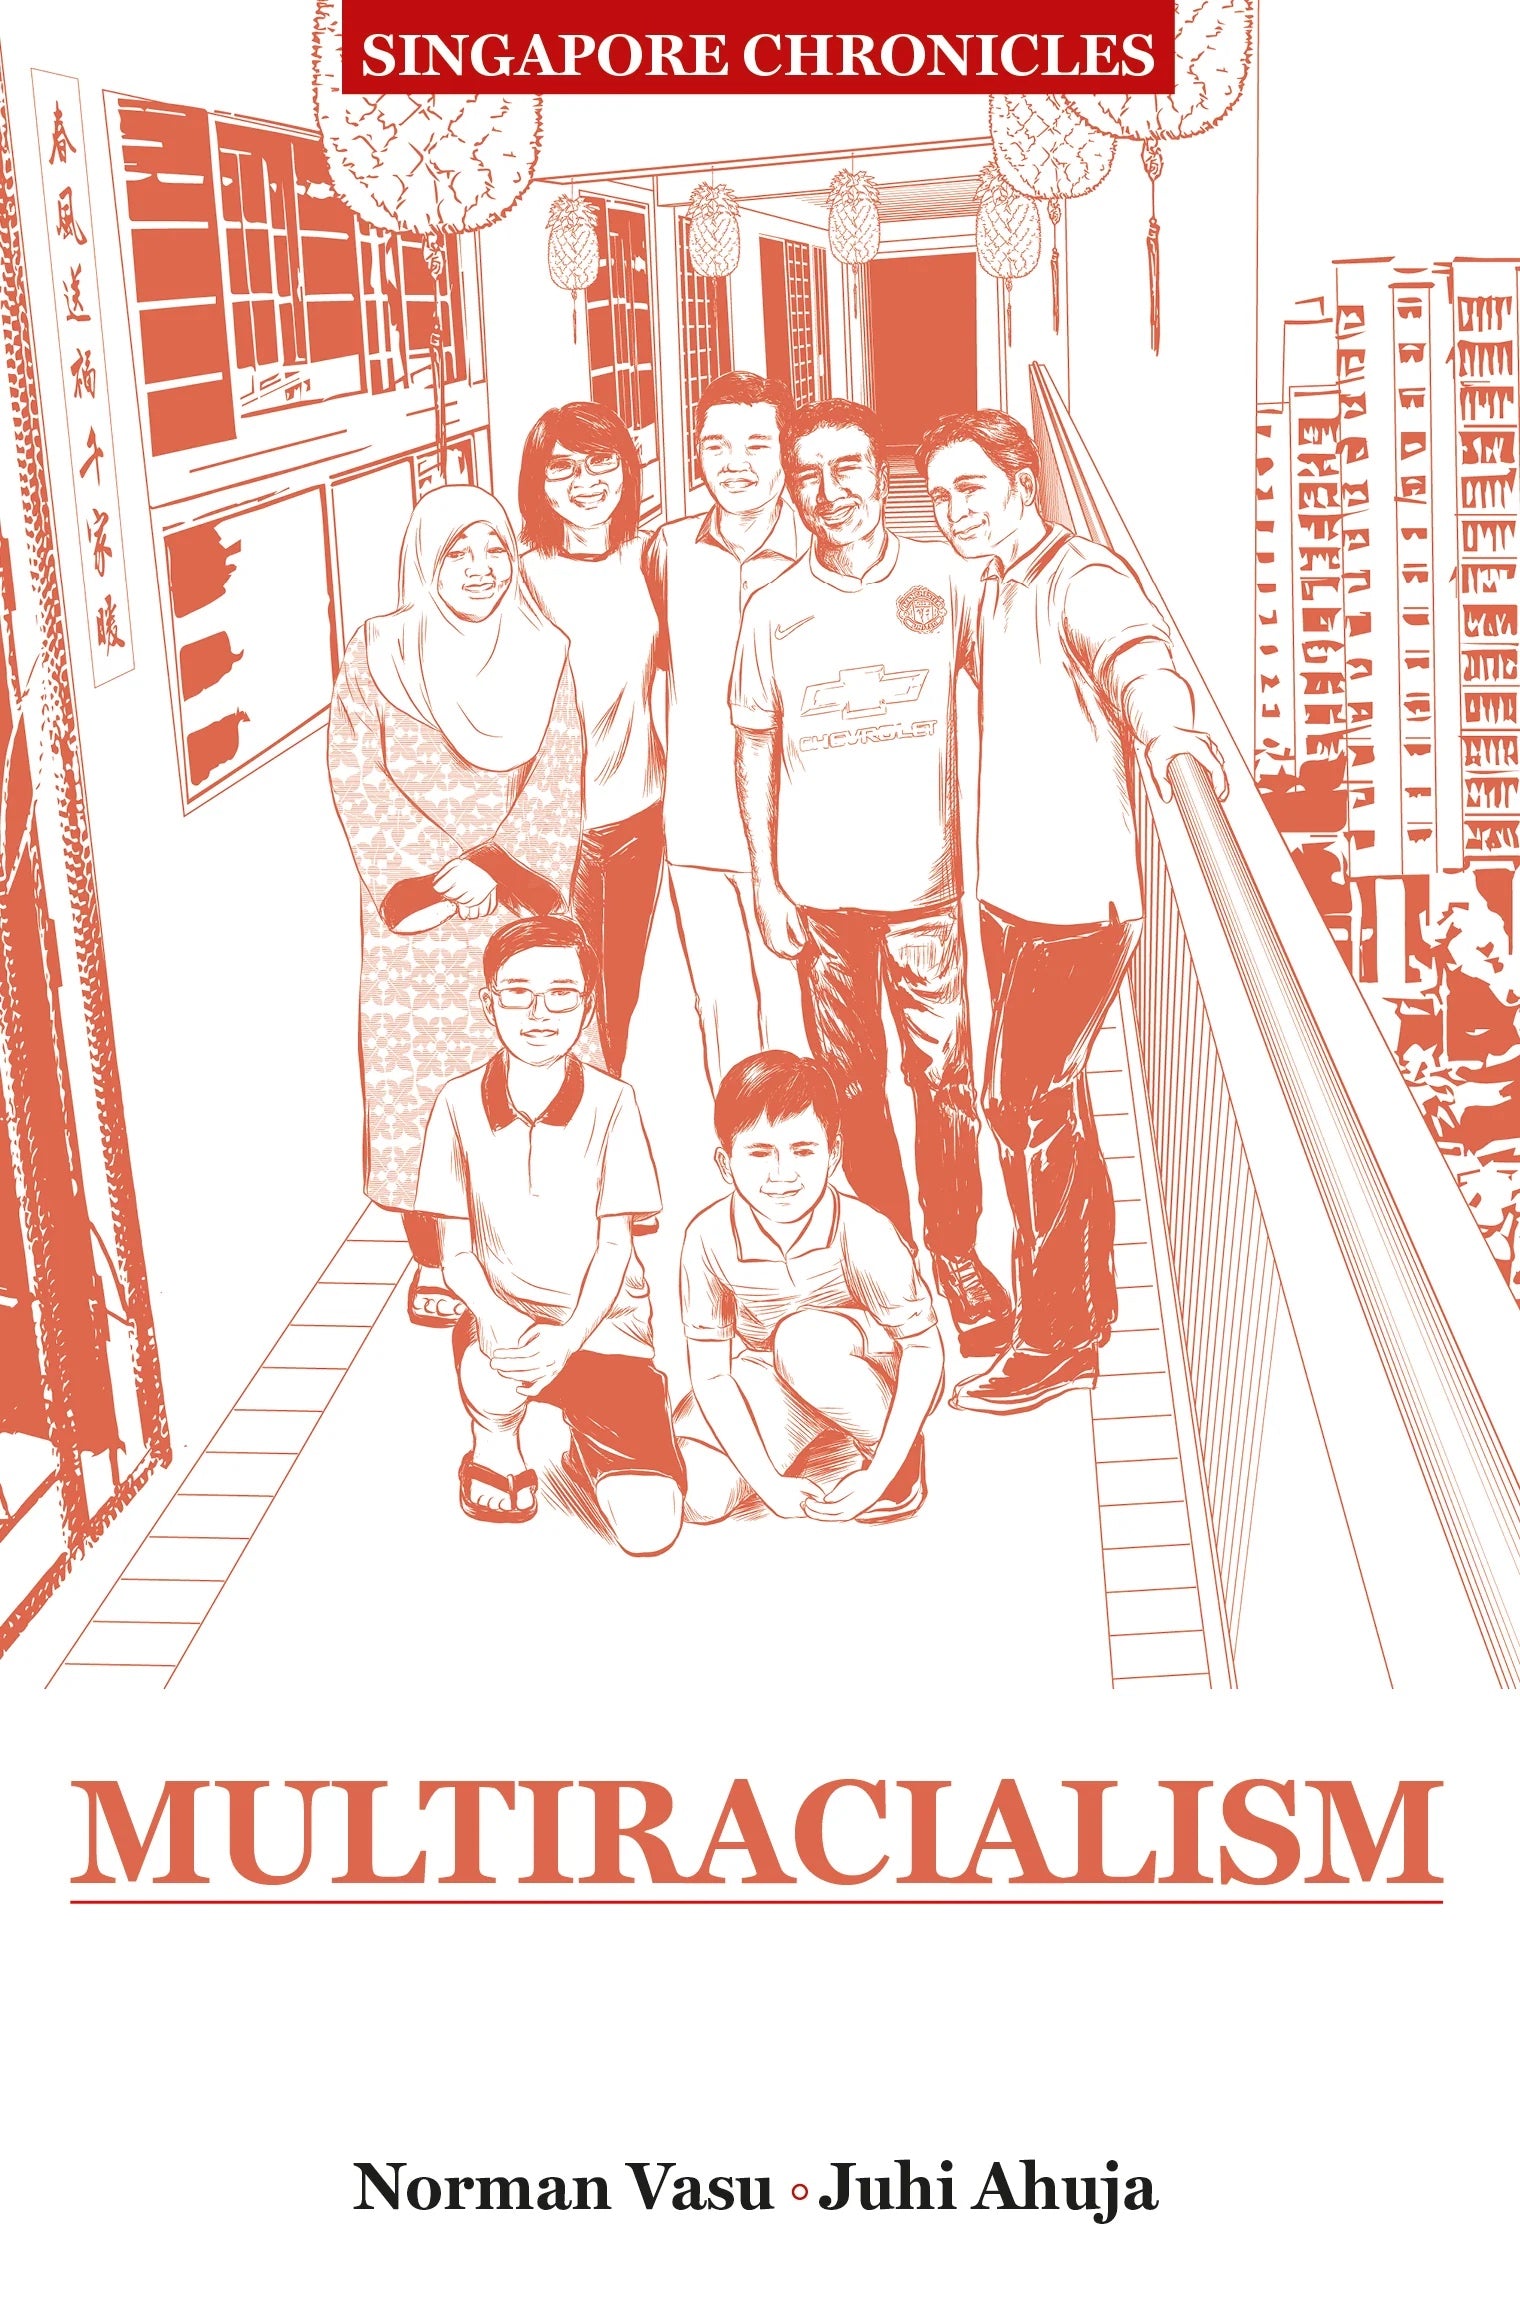 Singapore Chronicles: Multiracialism